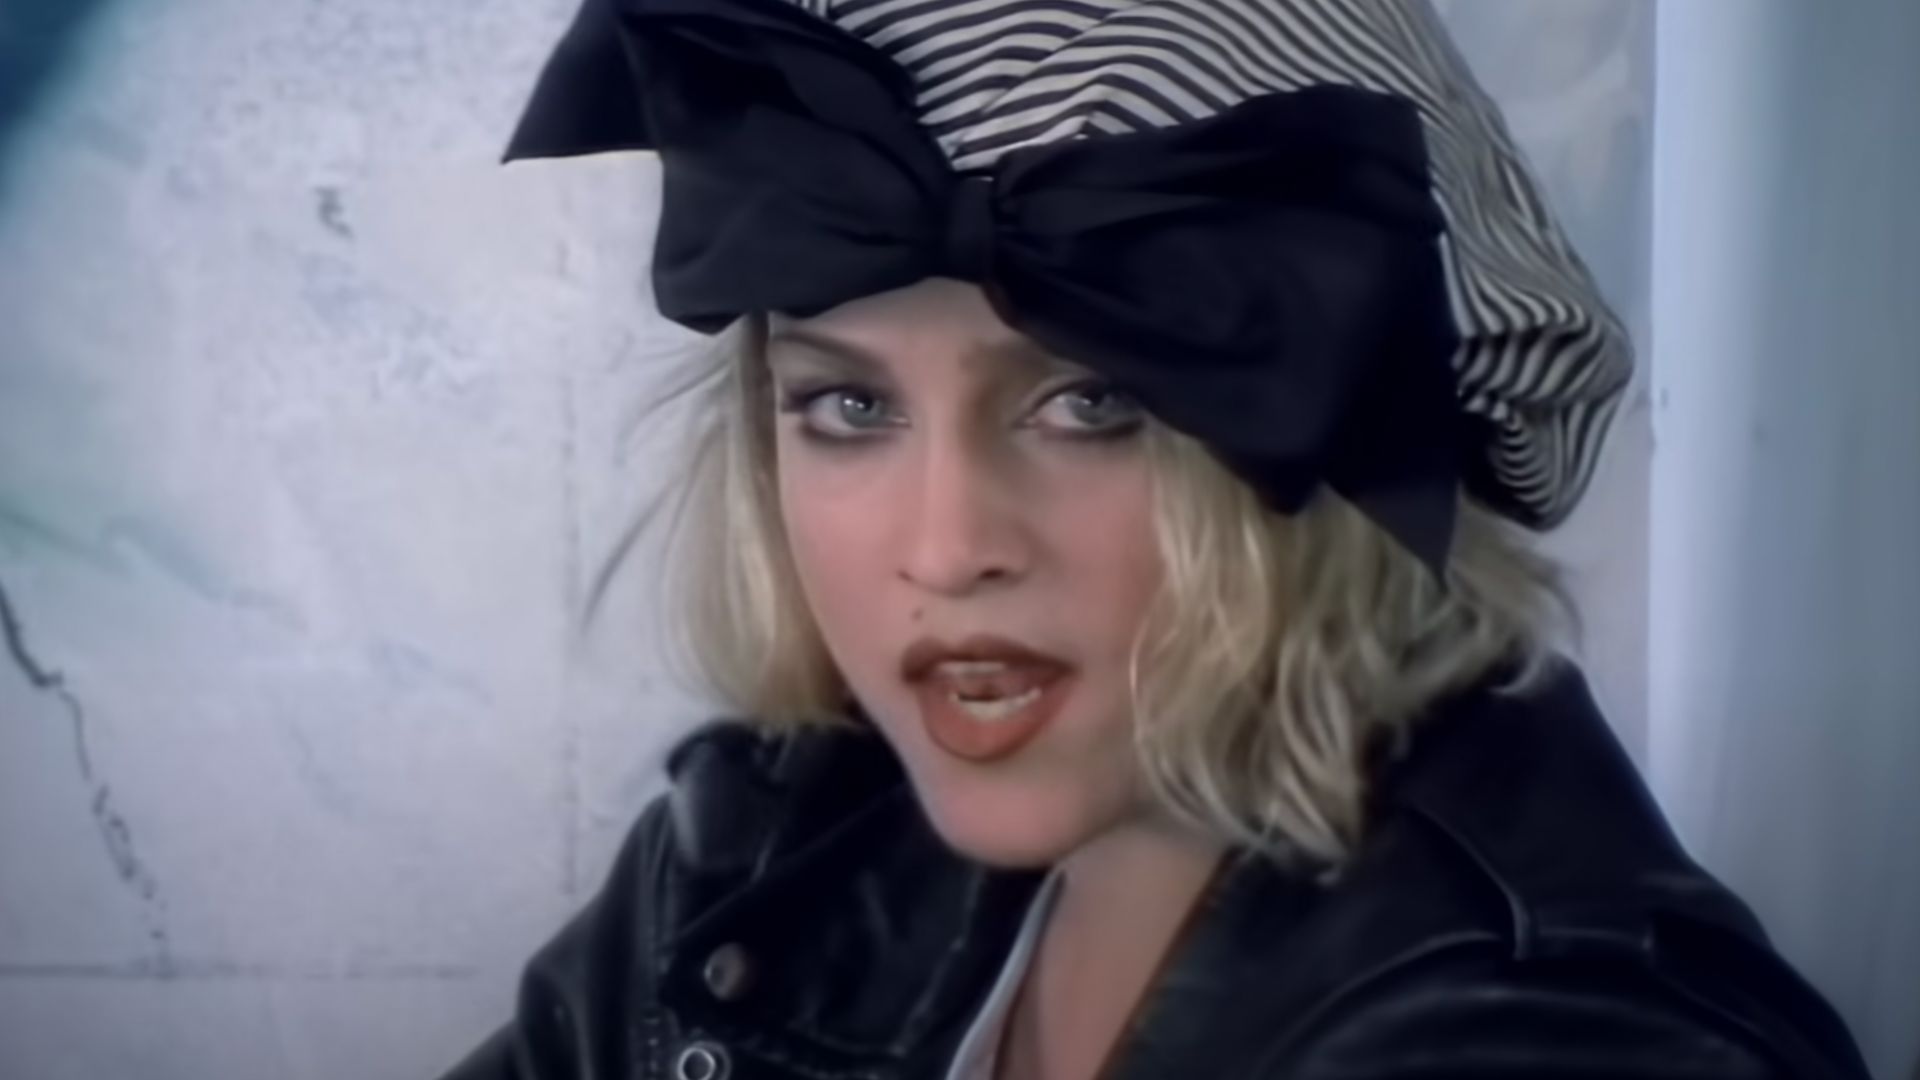 Madonna celebrates anniversary of classic hit ‘Borderline’ with digital single and remastered music video – RETROPOP – Fashionably Nostalgic